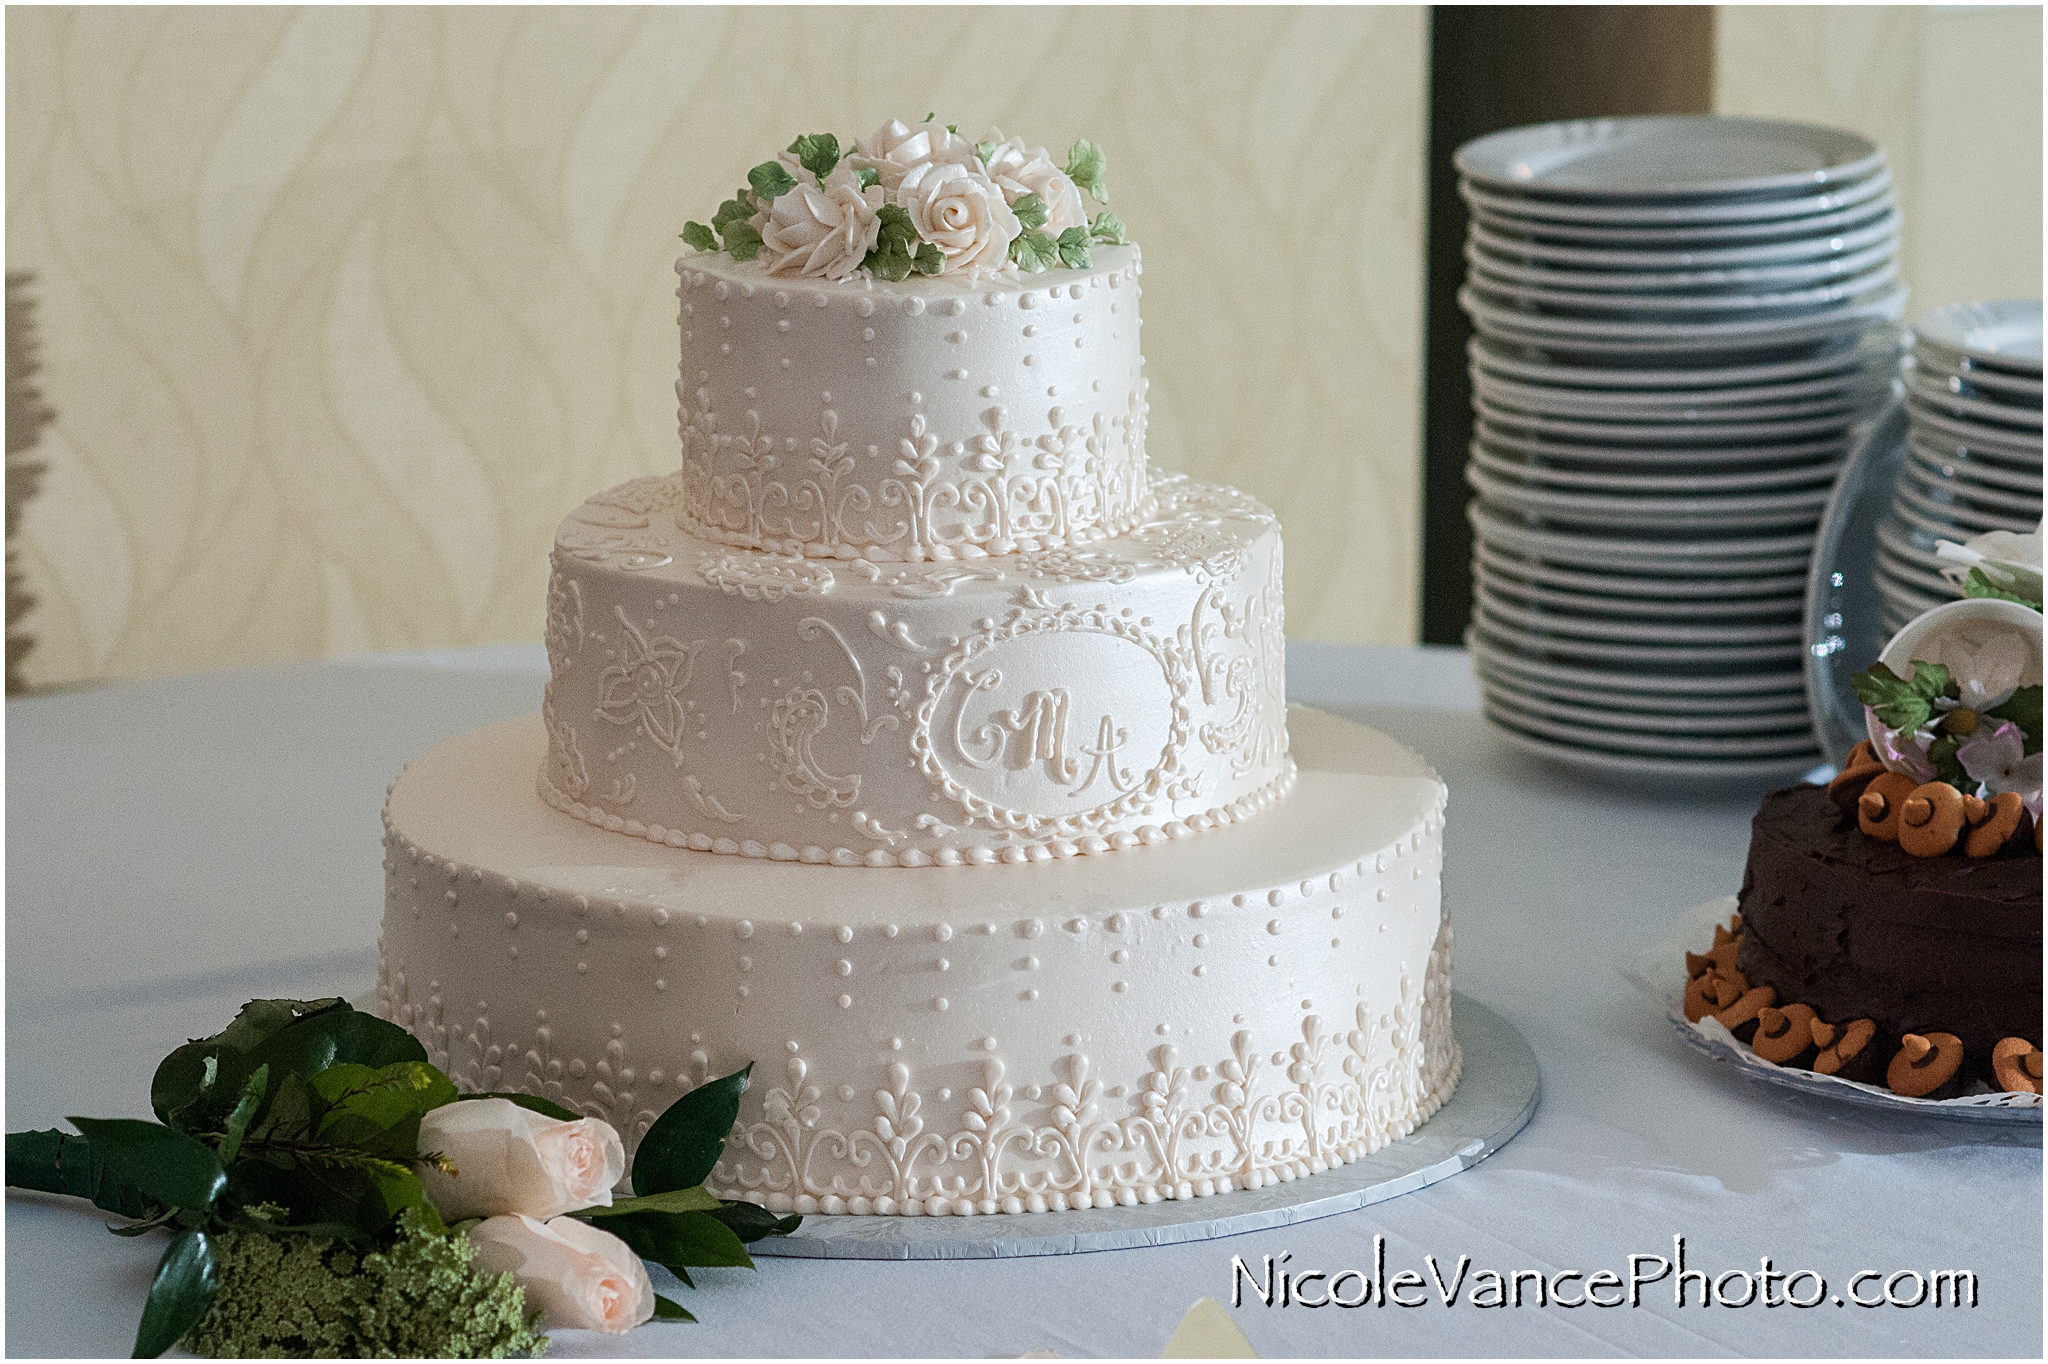 Wedding cake provided by Baker's Kitchen by Alvina